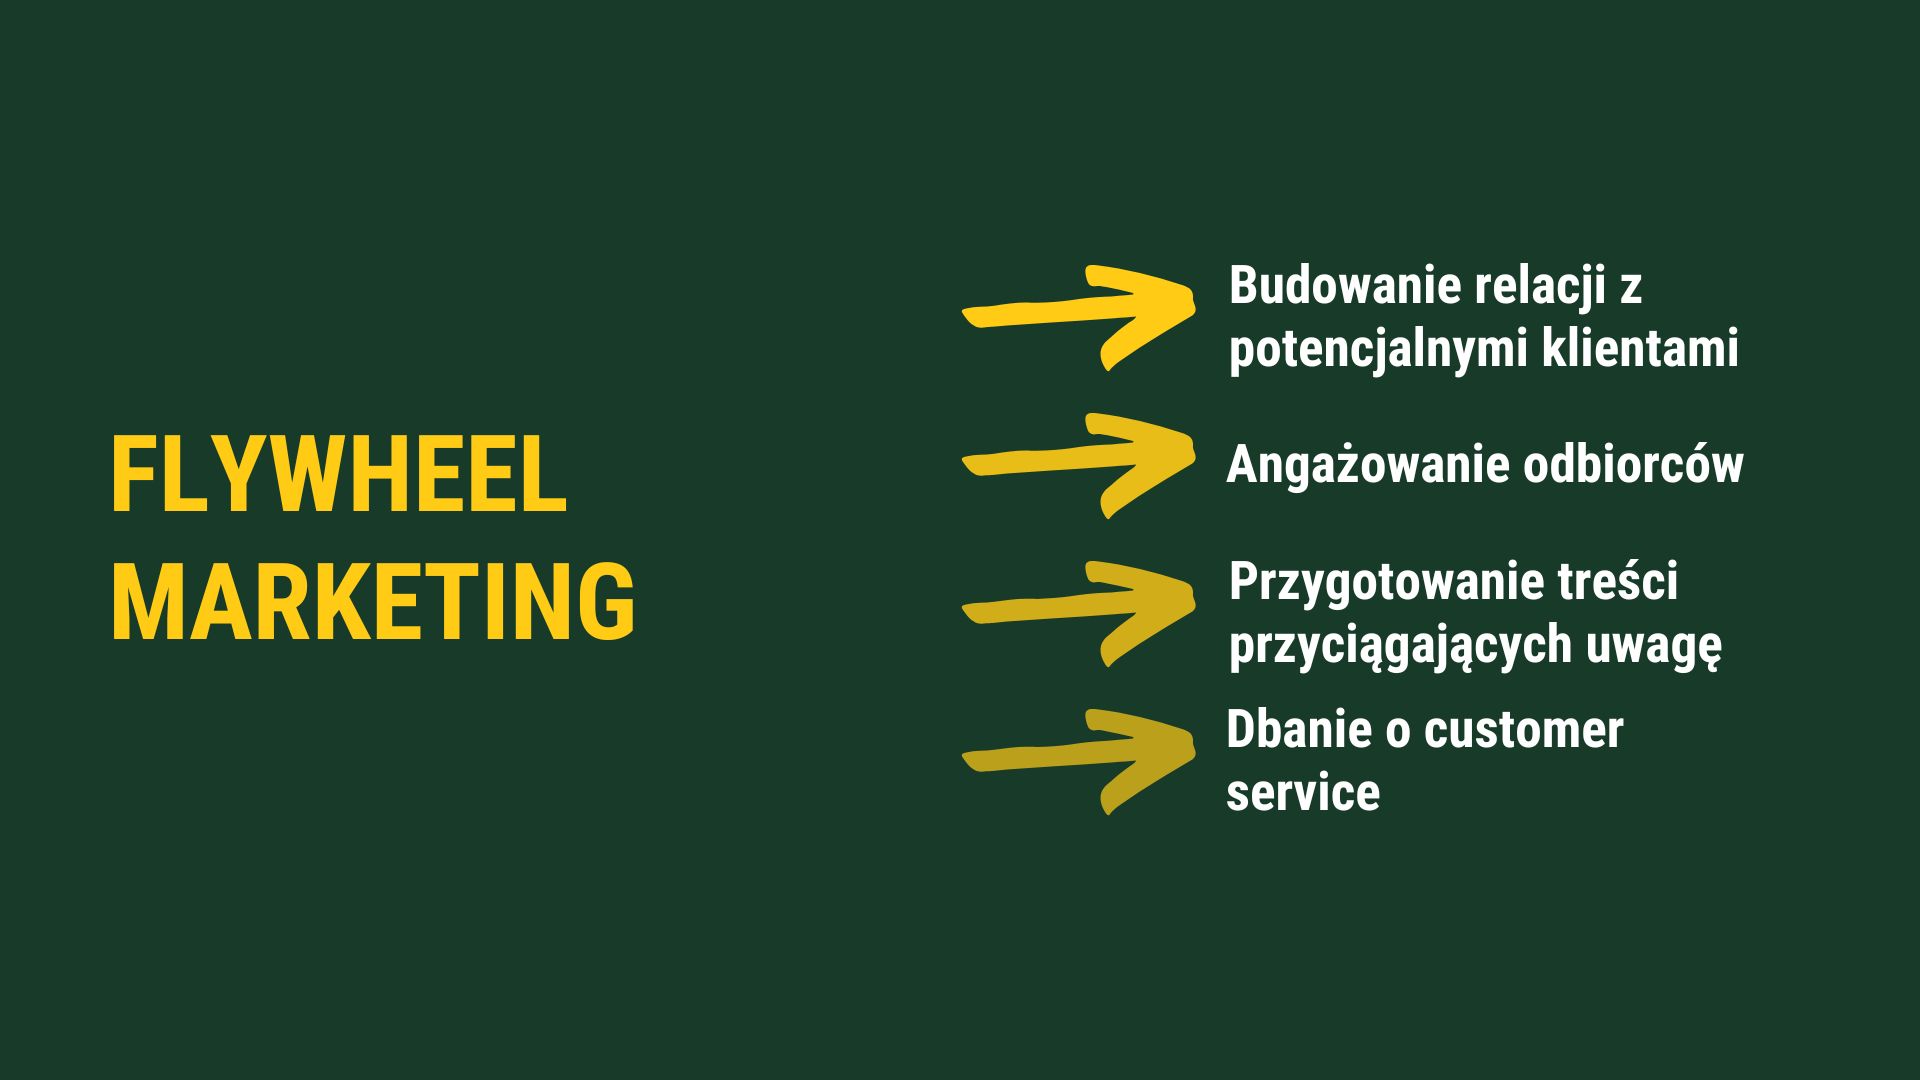 Flywheel marketing